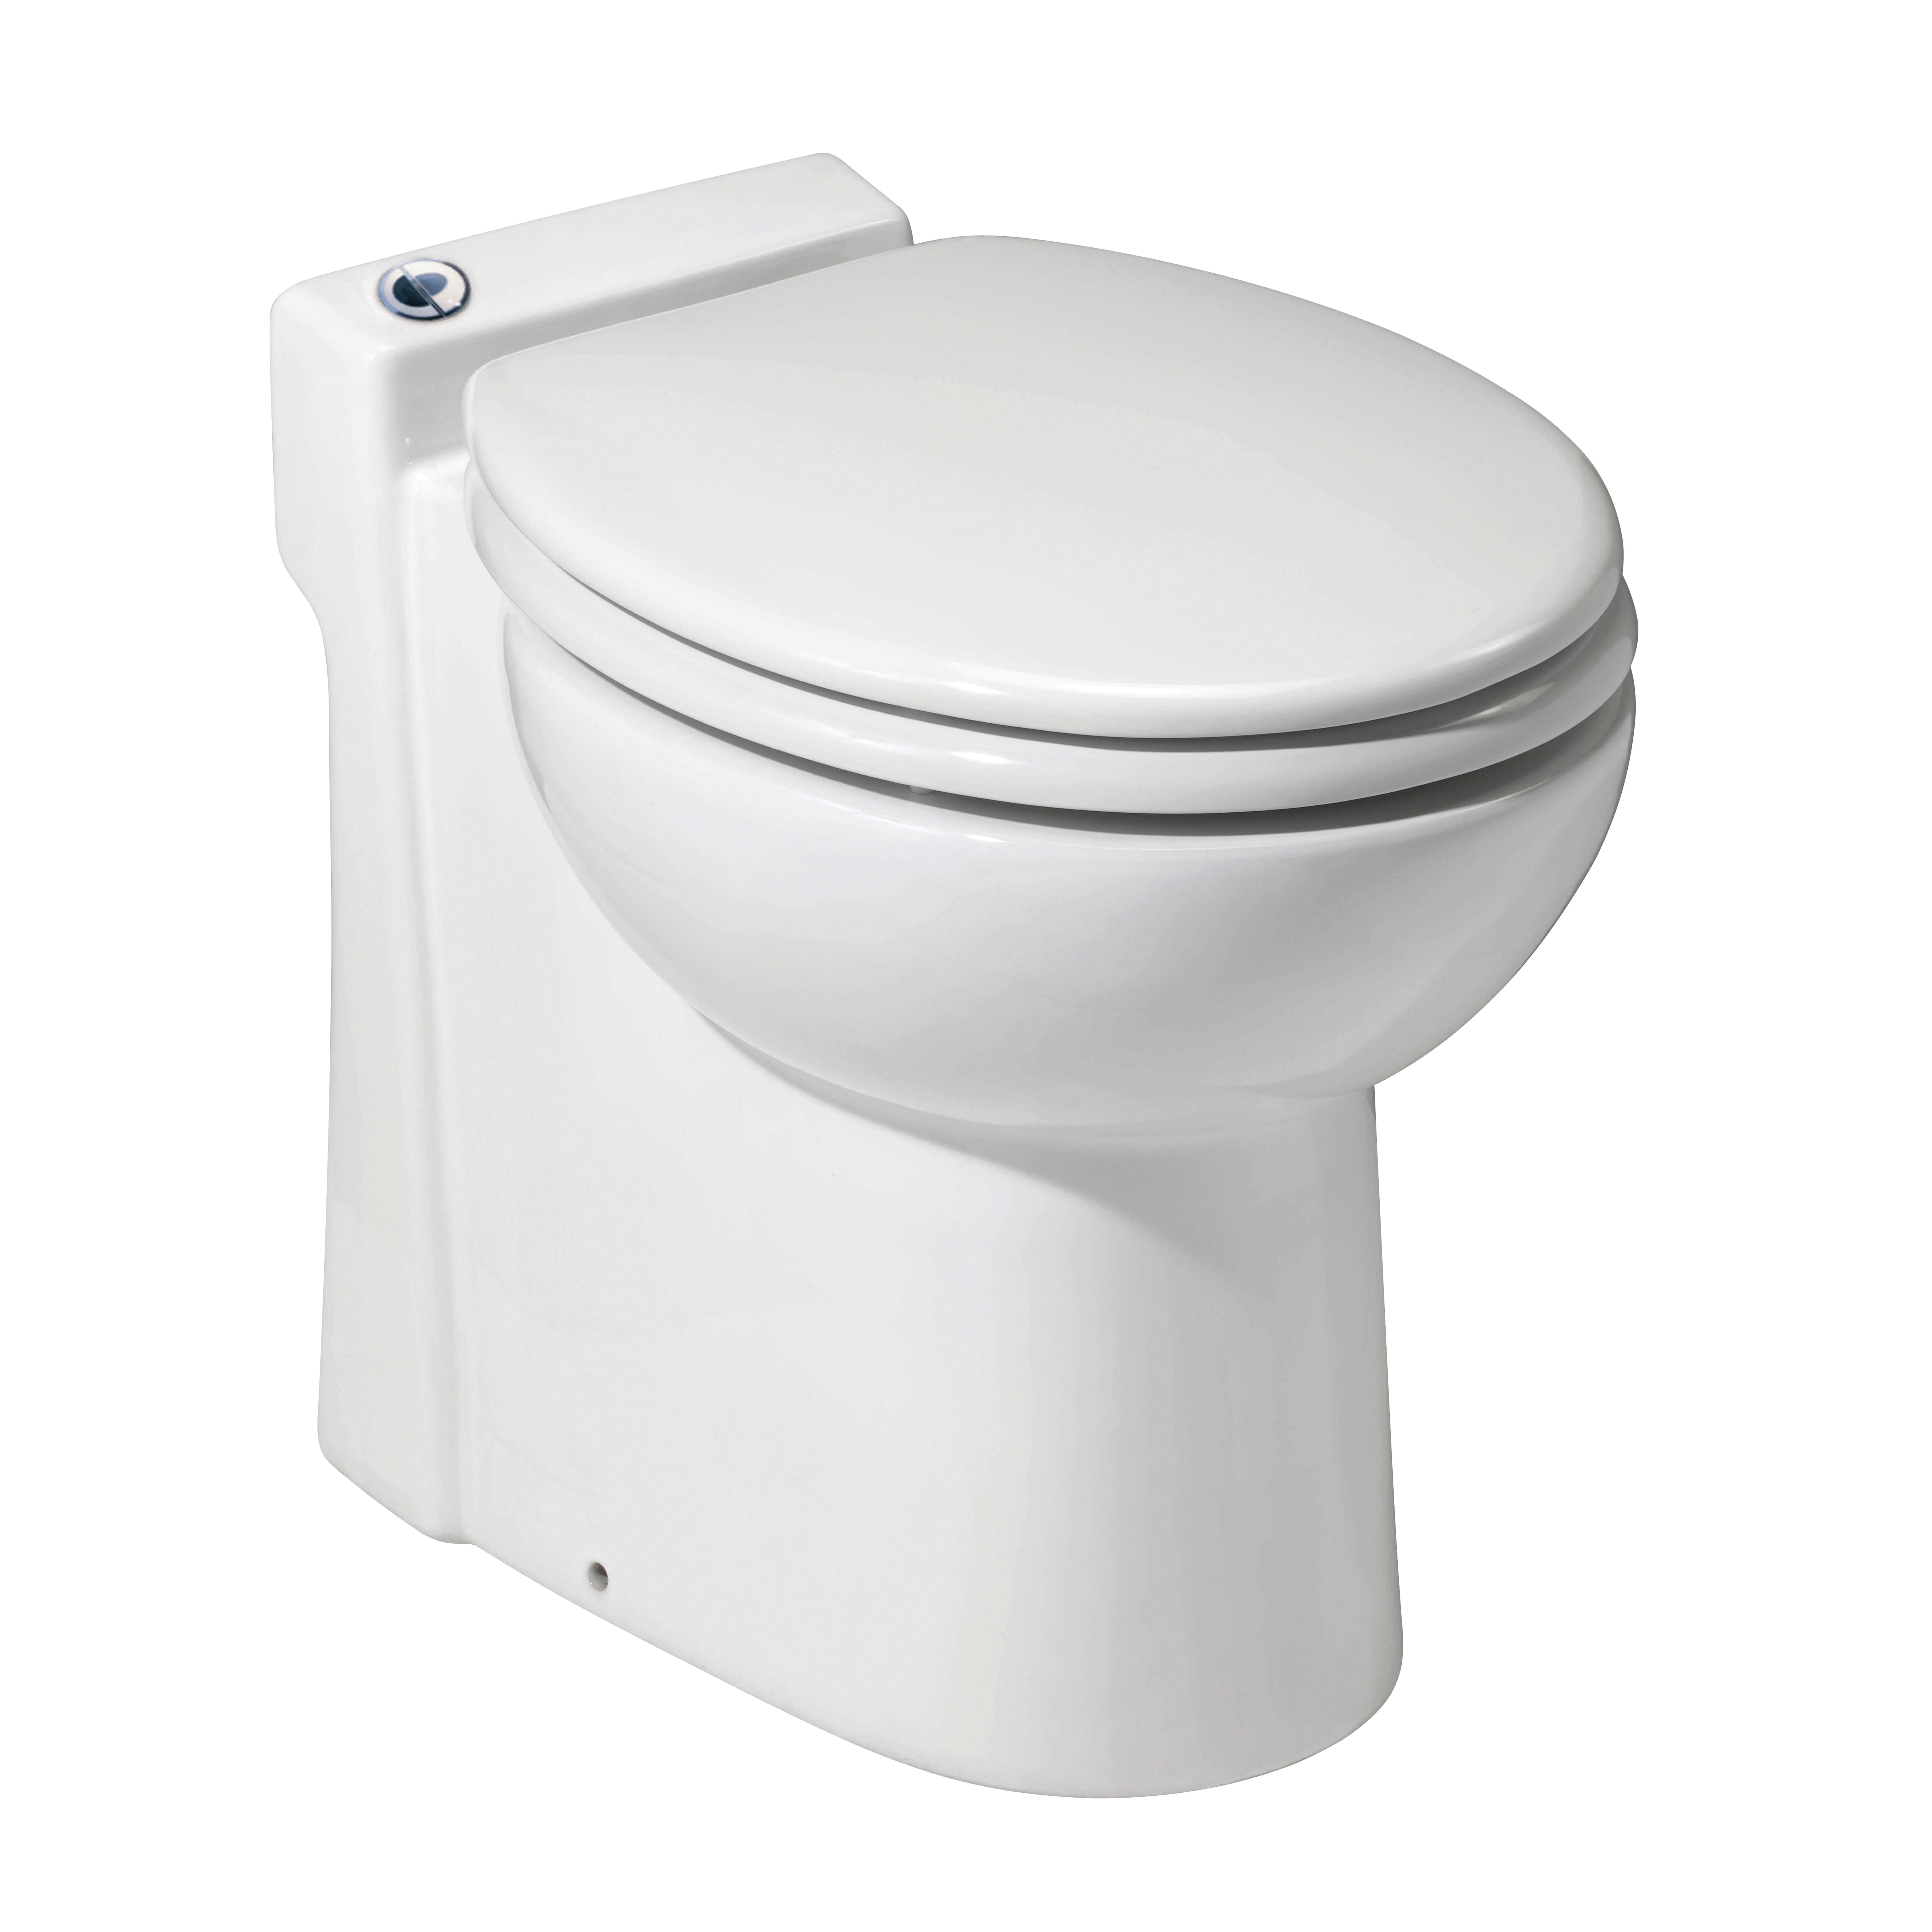 Saniflo® SANICOMPACT® 023 1-Piece Dual-Flush Toilet System With Macerator Pump, Round Bowl, 13/16 gpm Flush Rate, White, Import